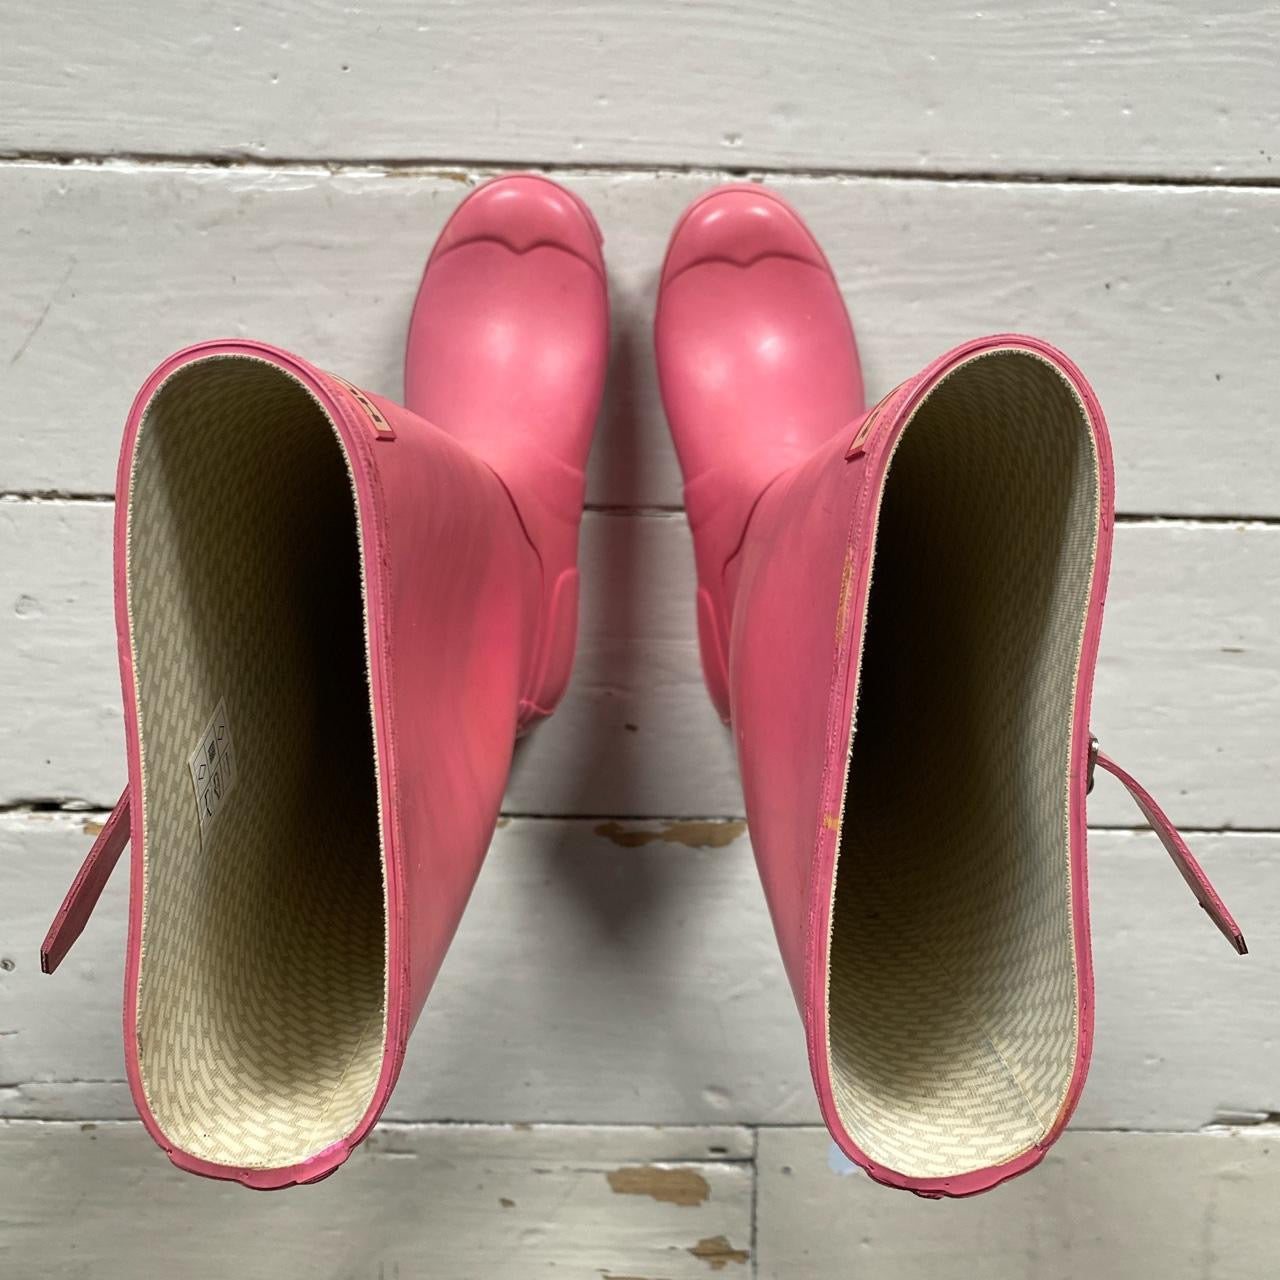 Hunter Pink Wellies Boots (UK 5)